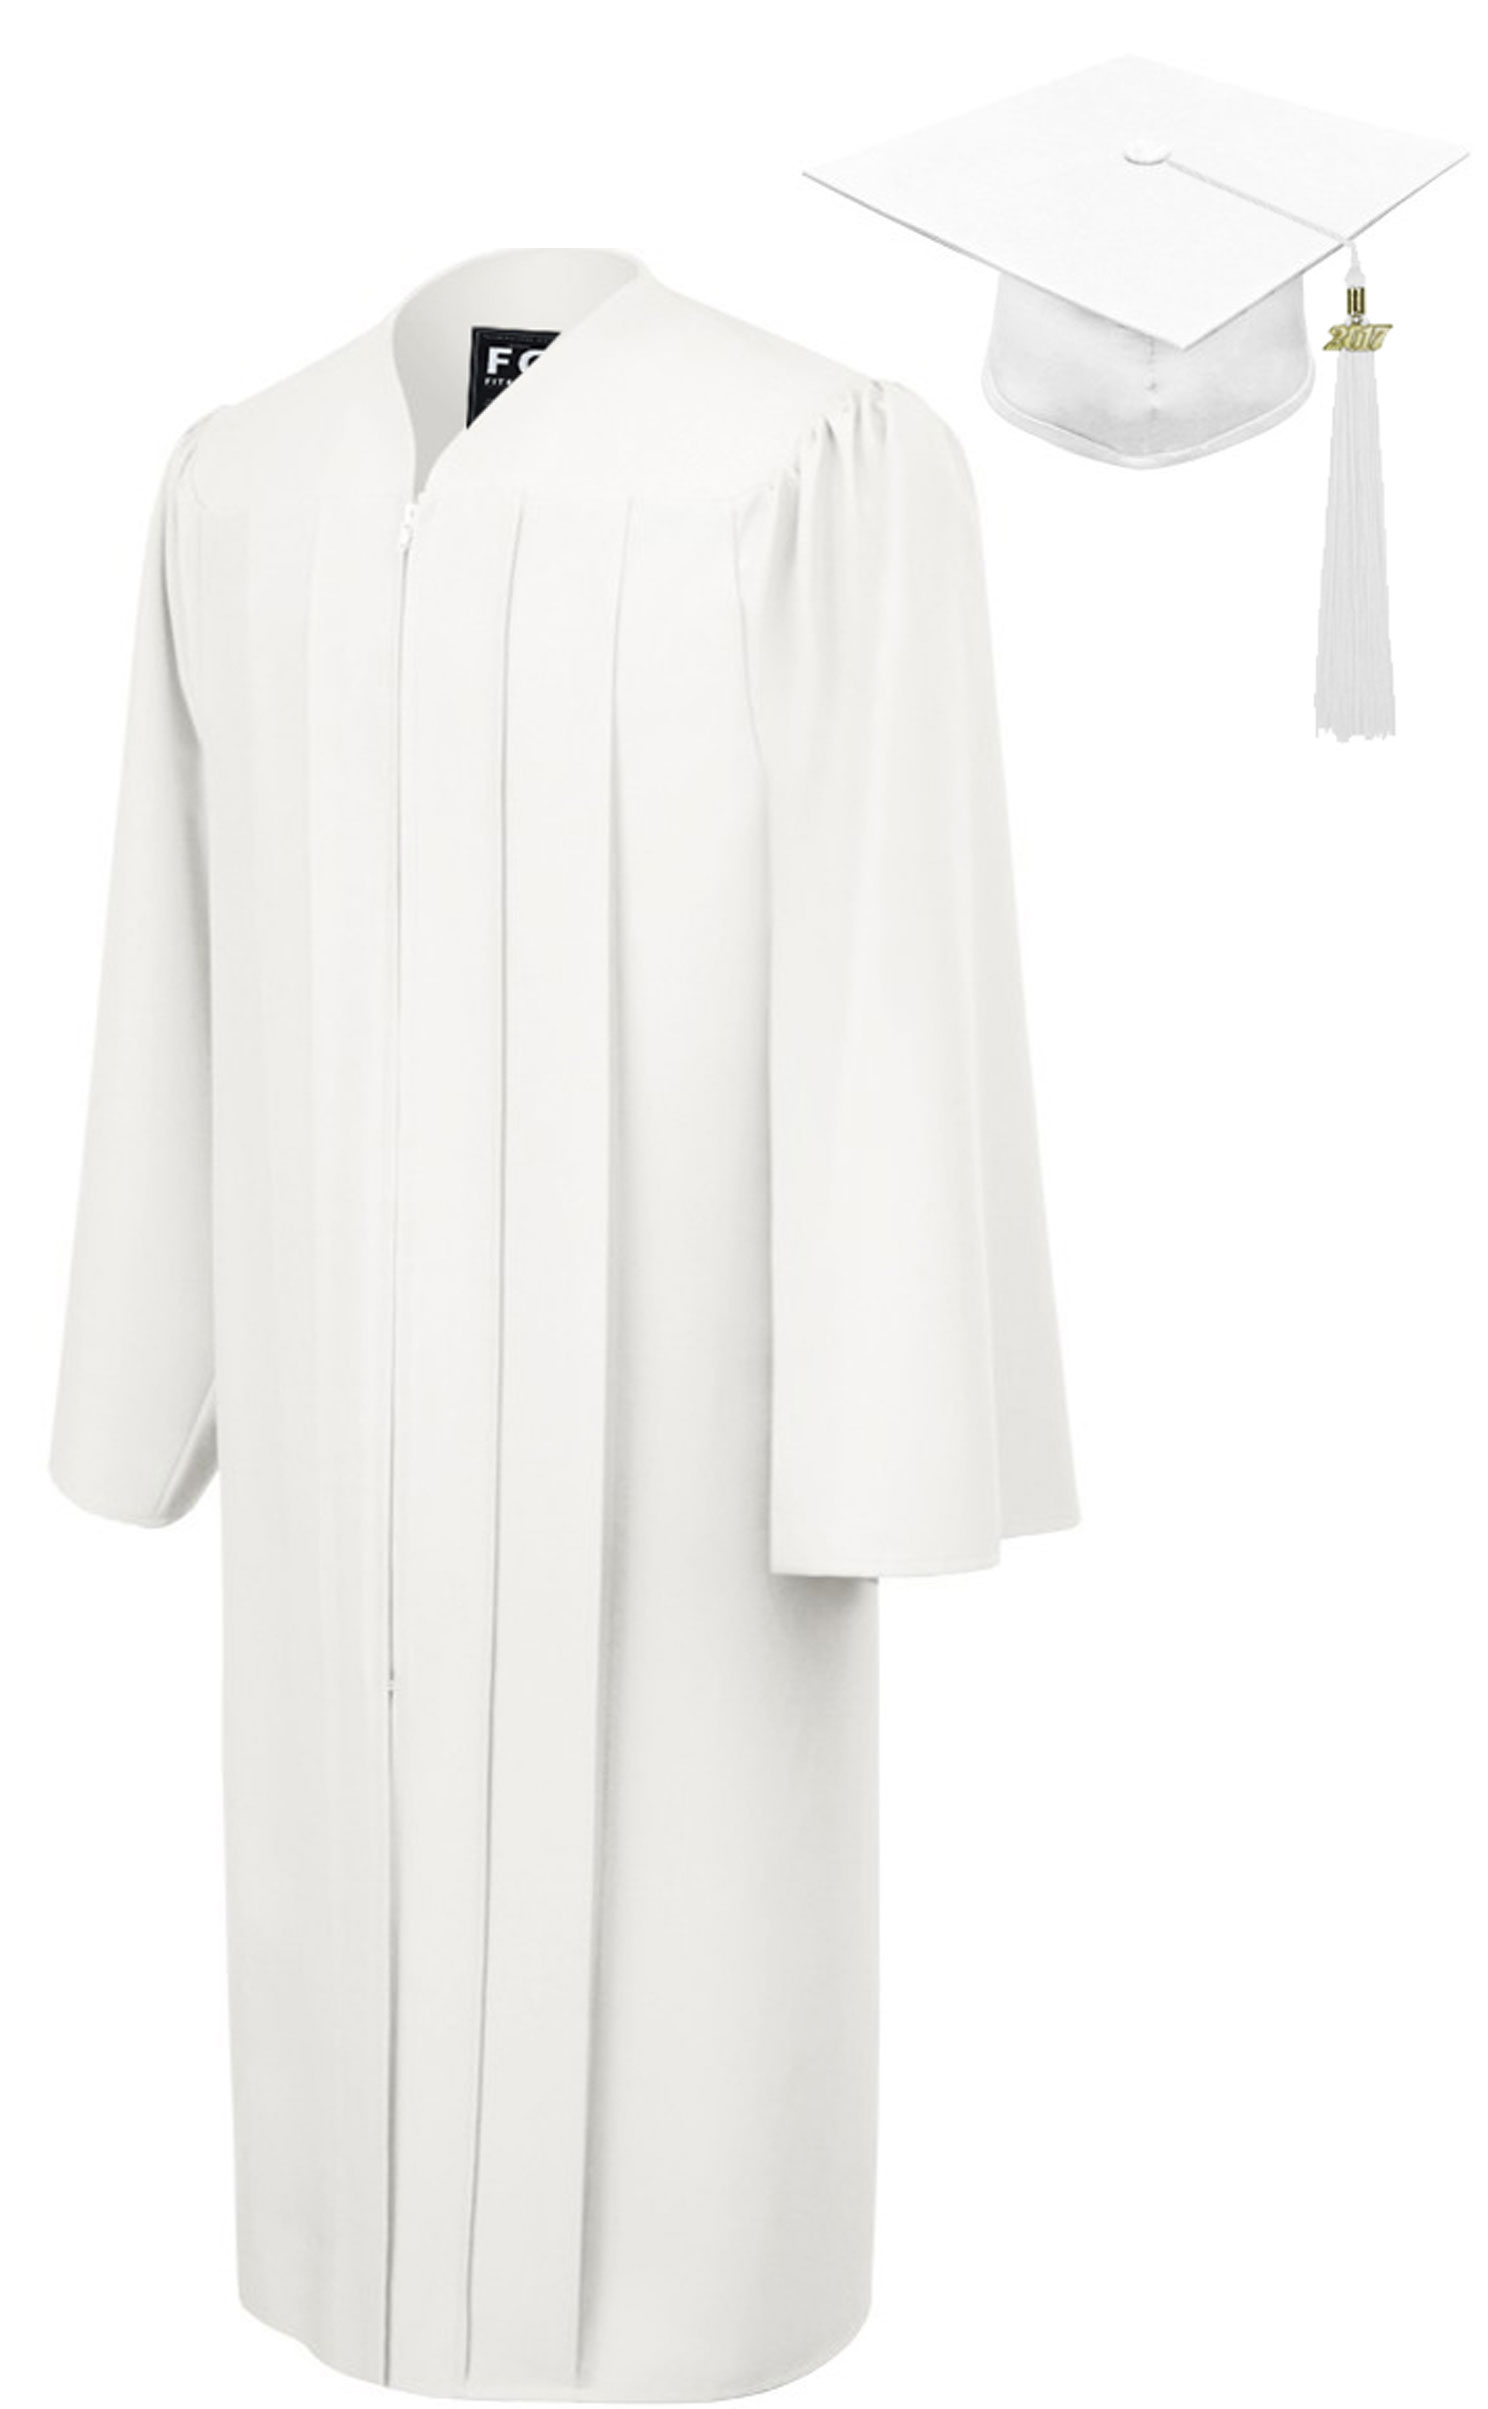 white gown graduation